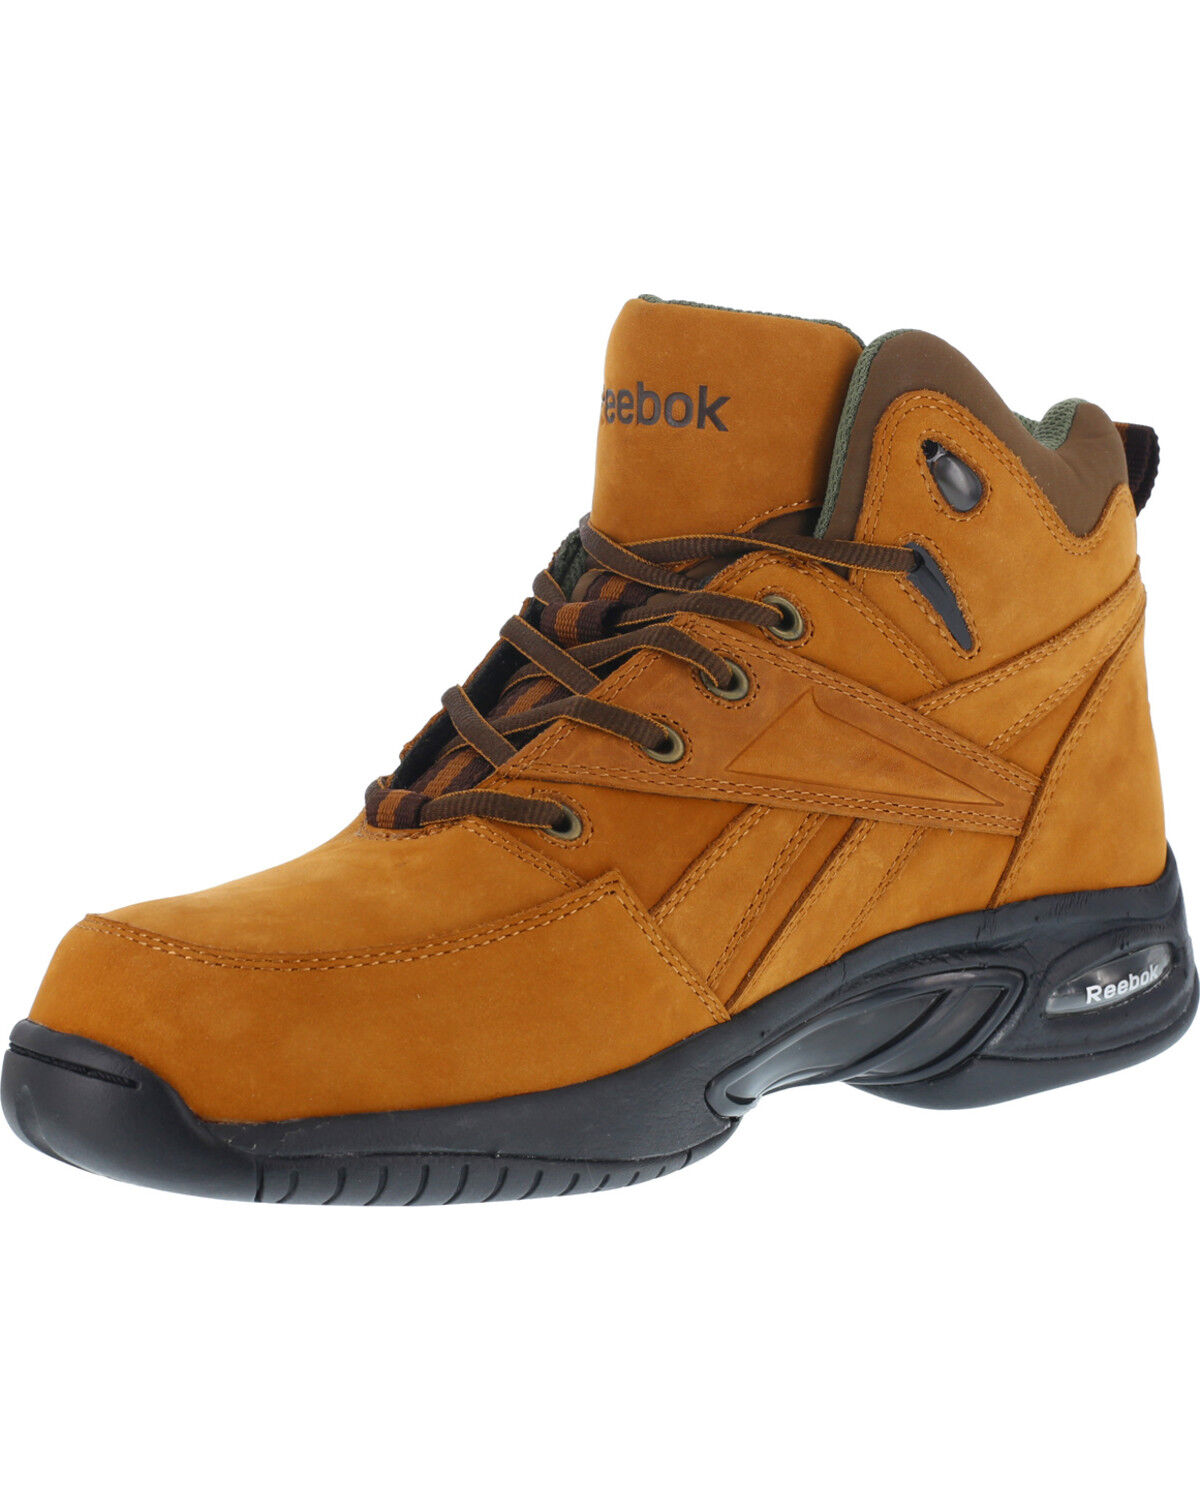 reebok hiking boots